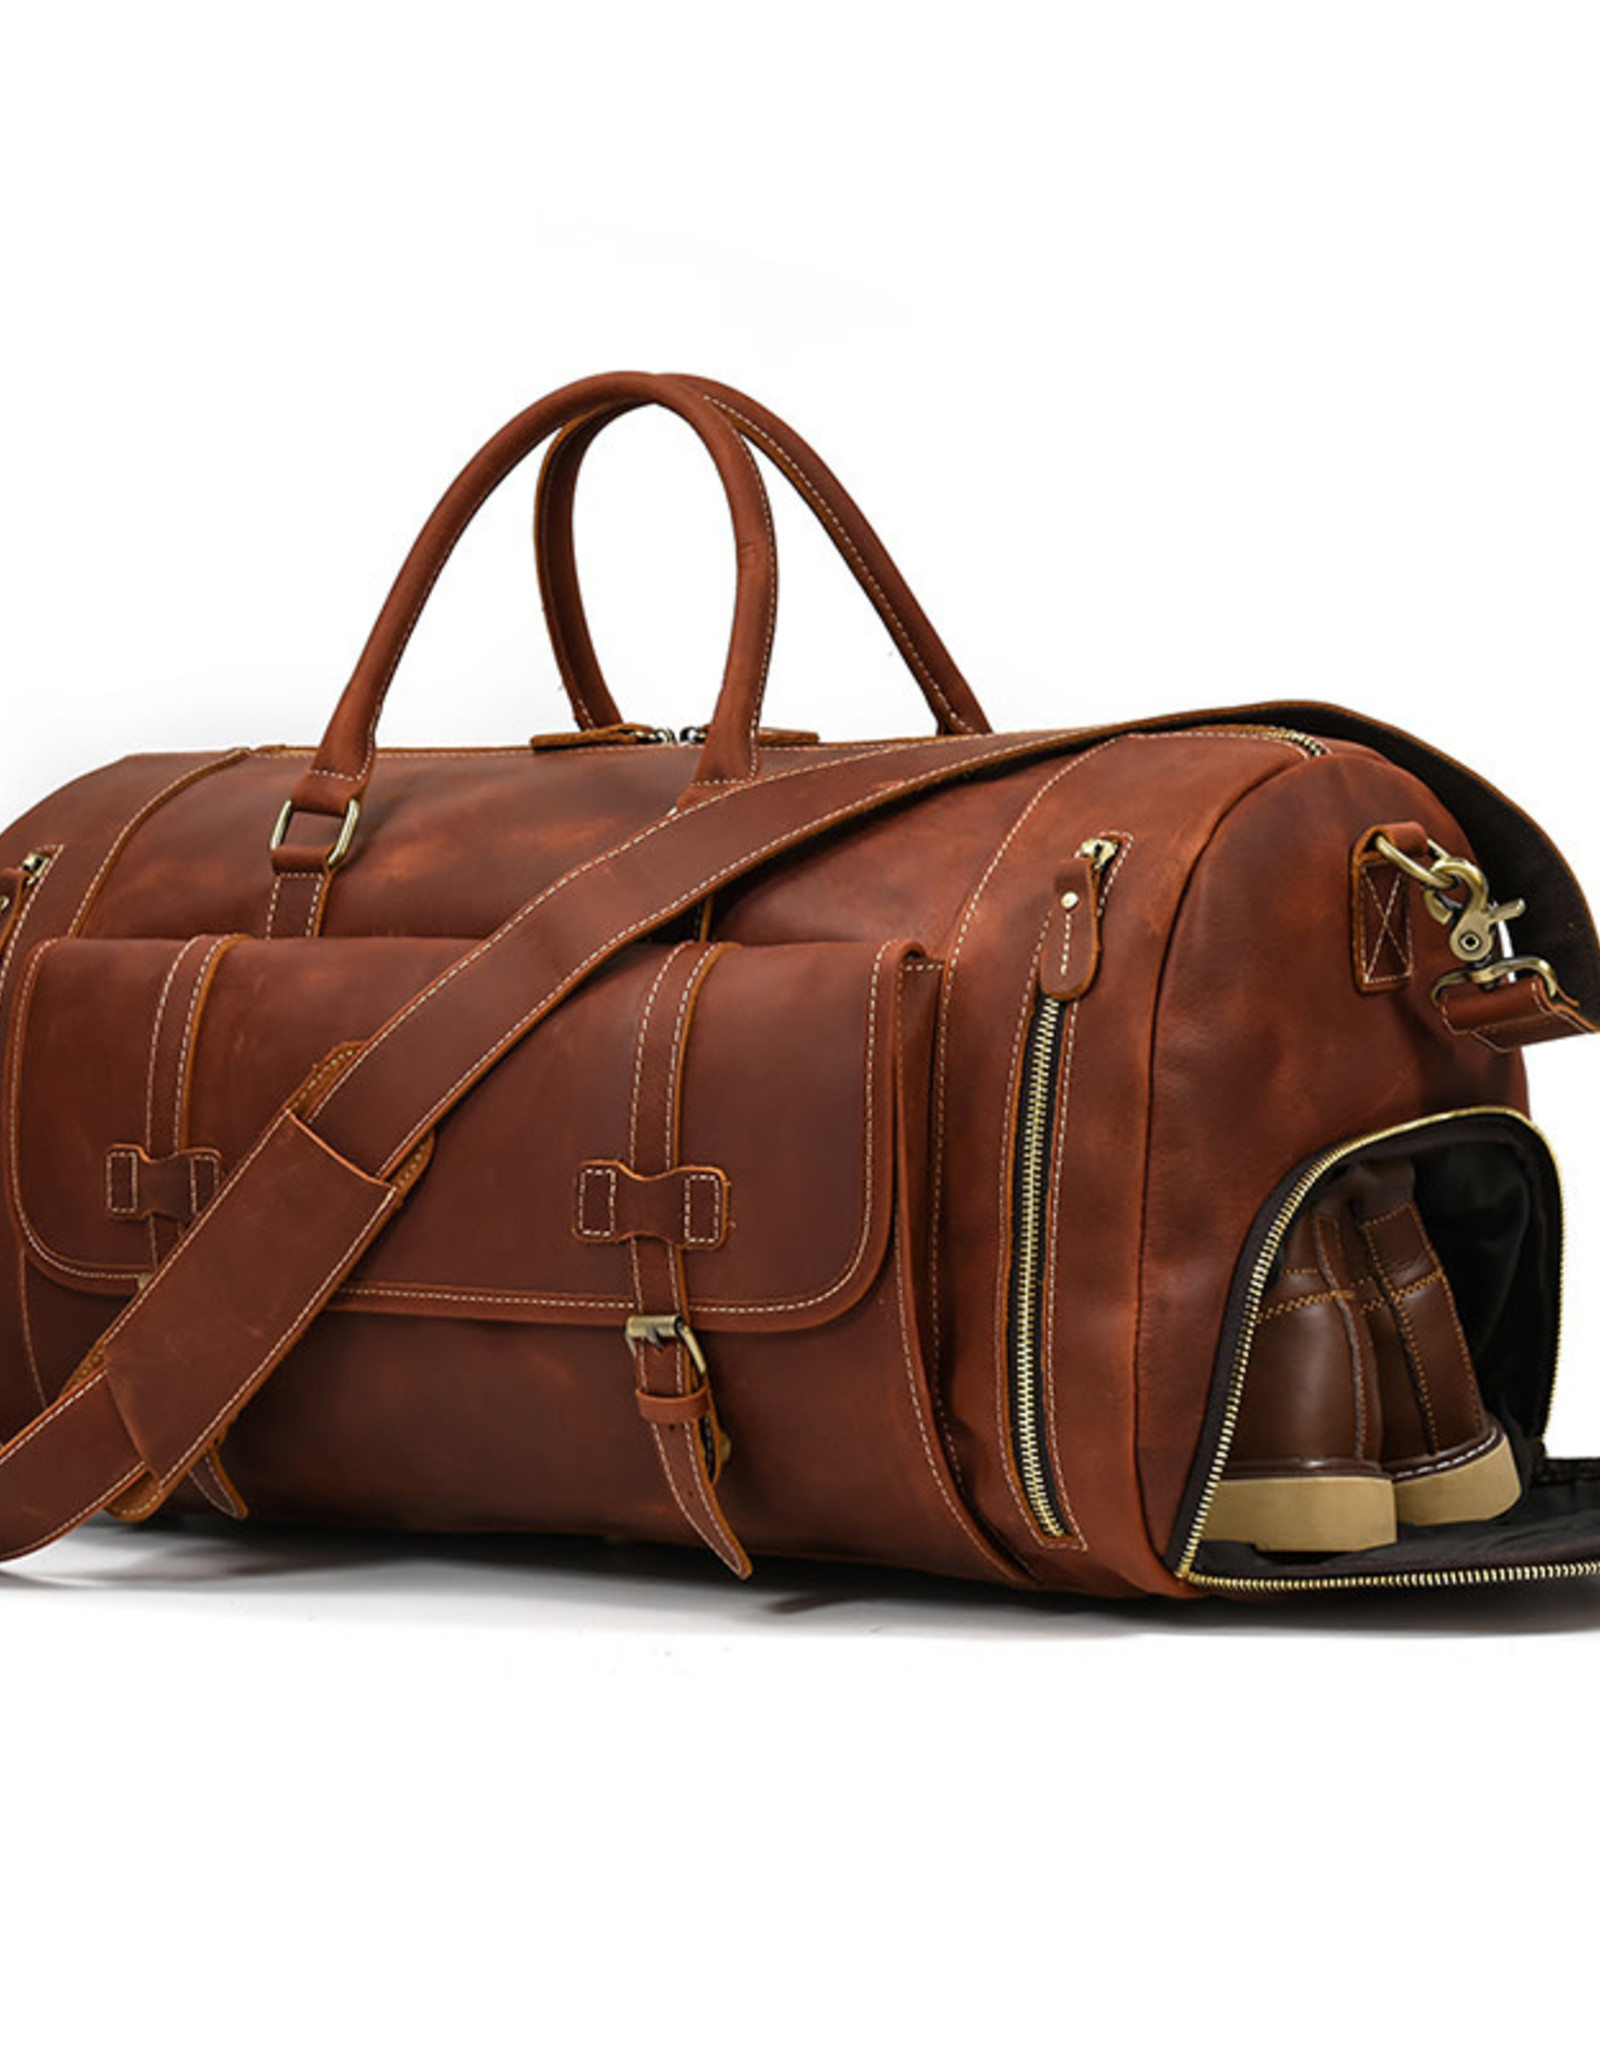 Santiago Travel Luggage Bag Genuine Leather